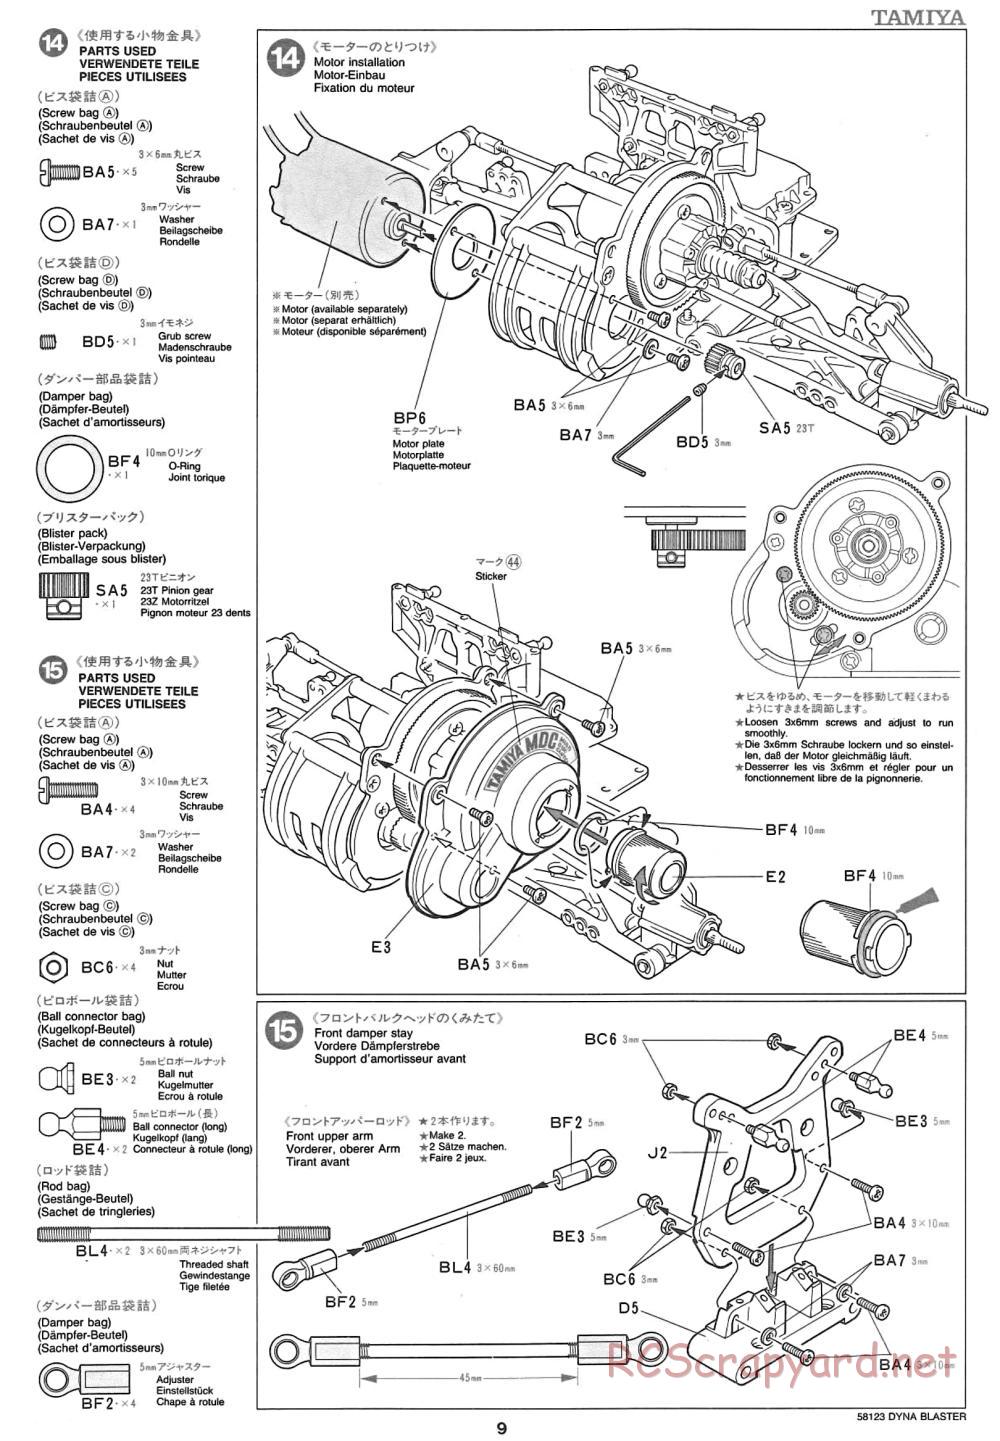 Tamiya - Dyna Blaster Chassis - Manual - Page 9